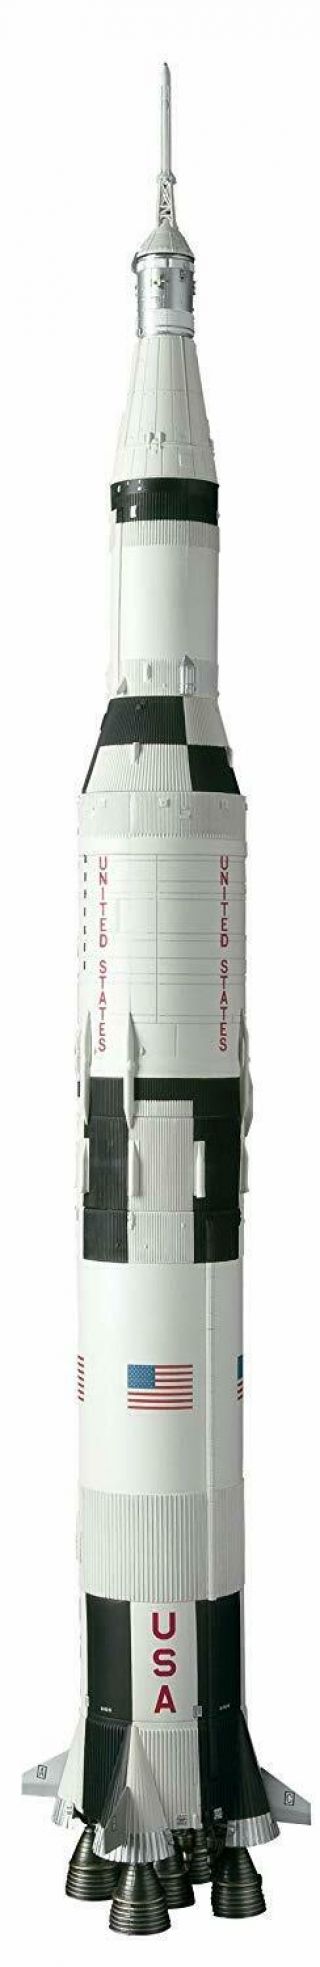 Bandai - Otona No Chogokin Apollo 11 & Saturn V Launch Vehicle First Limited